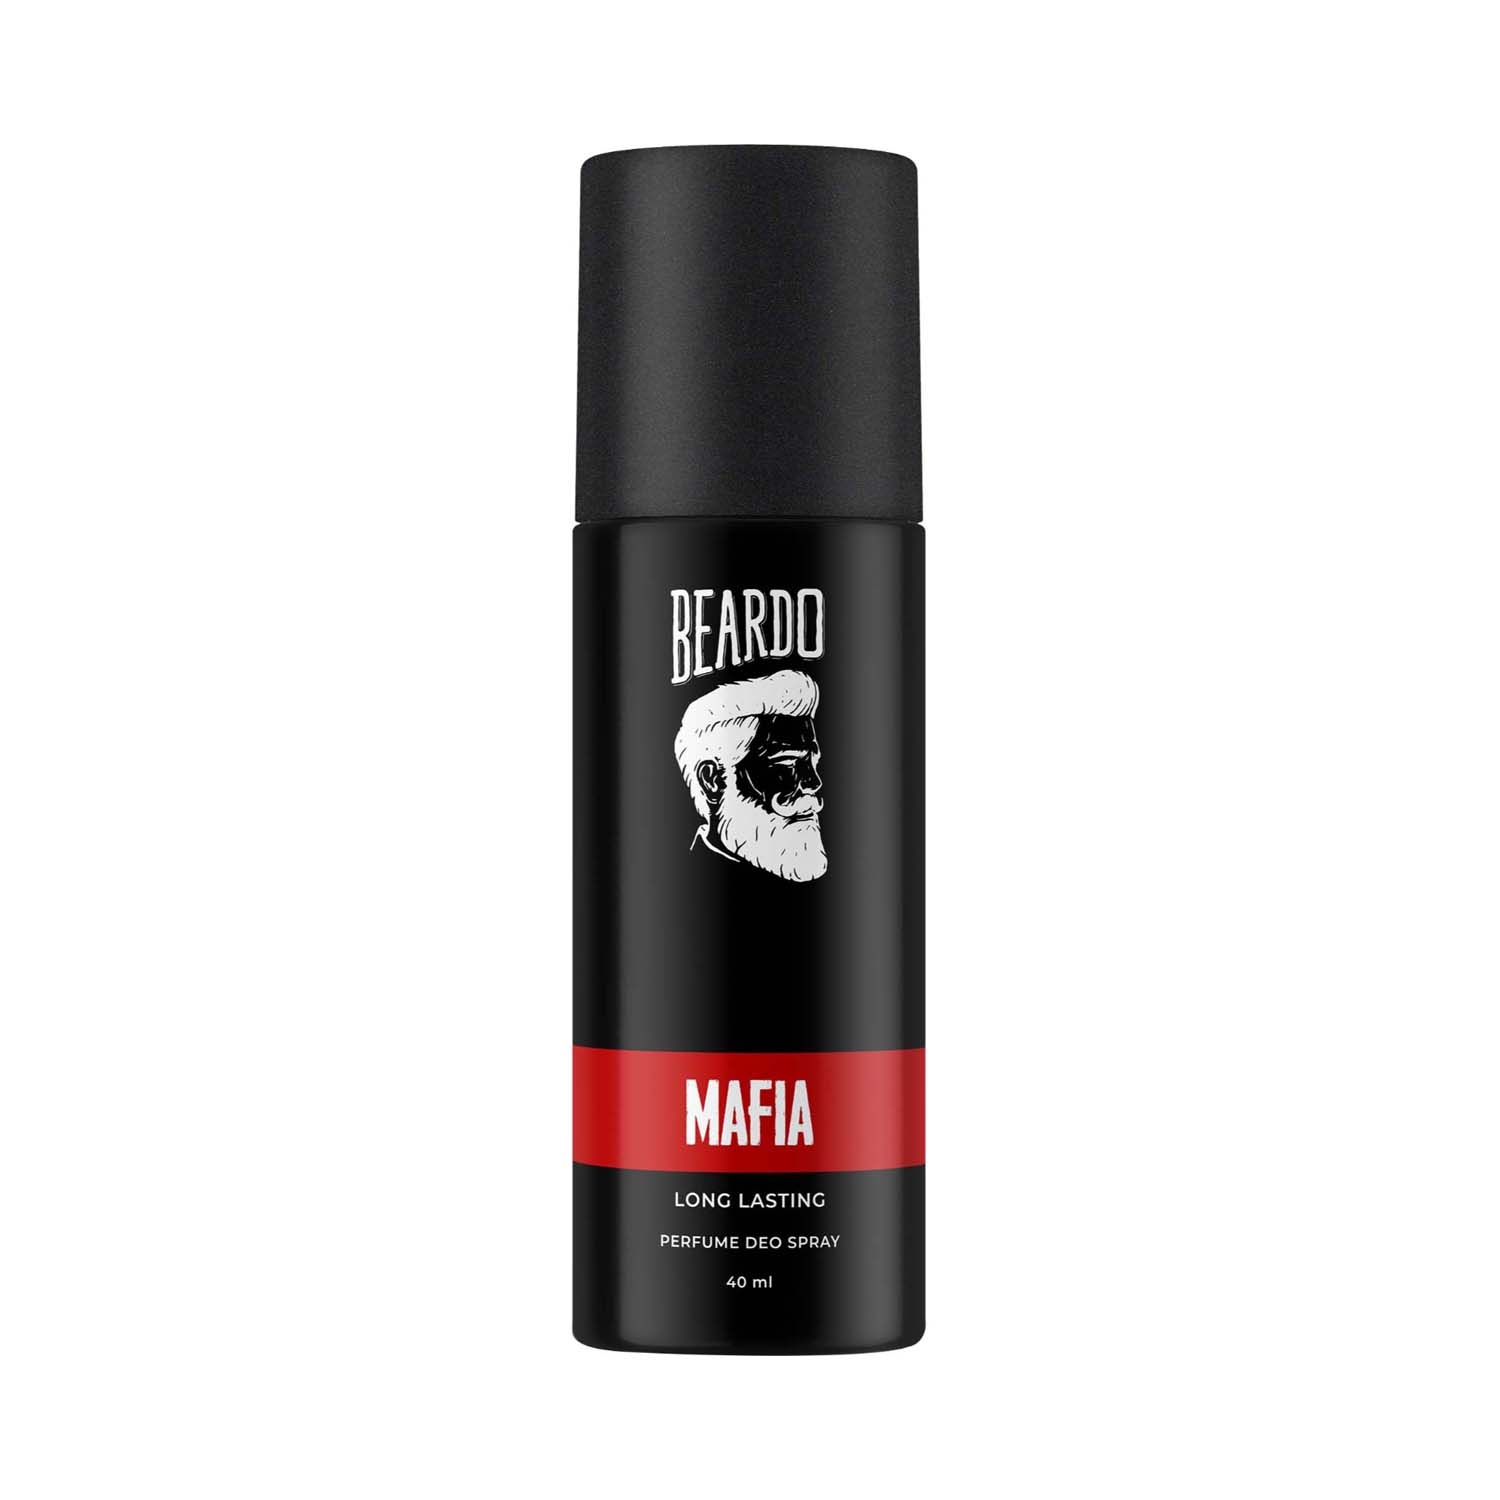 Beardo | Beardo Mafia Perfume Deodorant Body Spray (40ml)